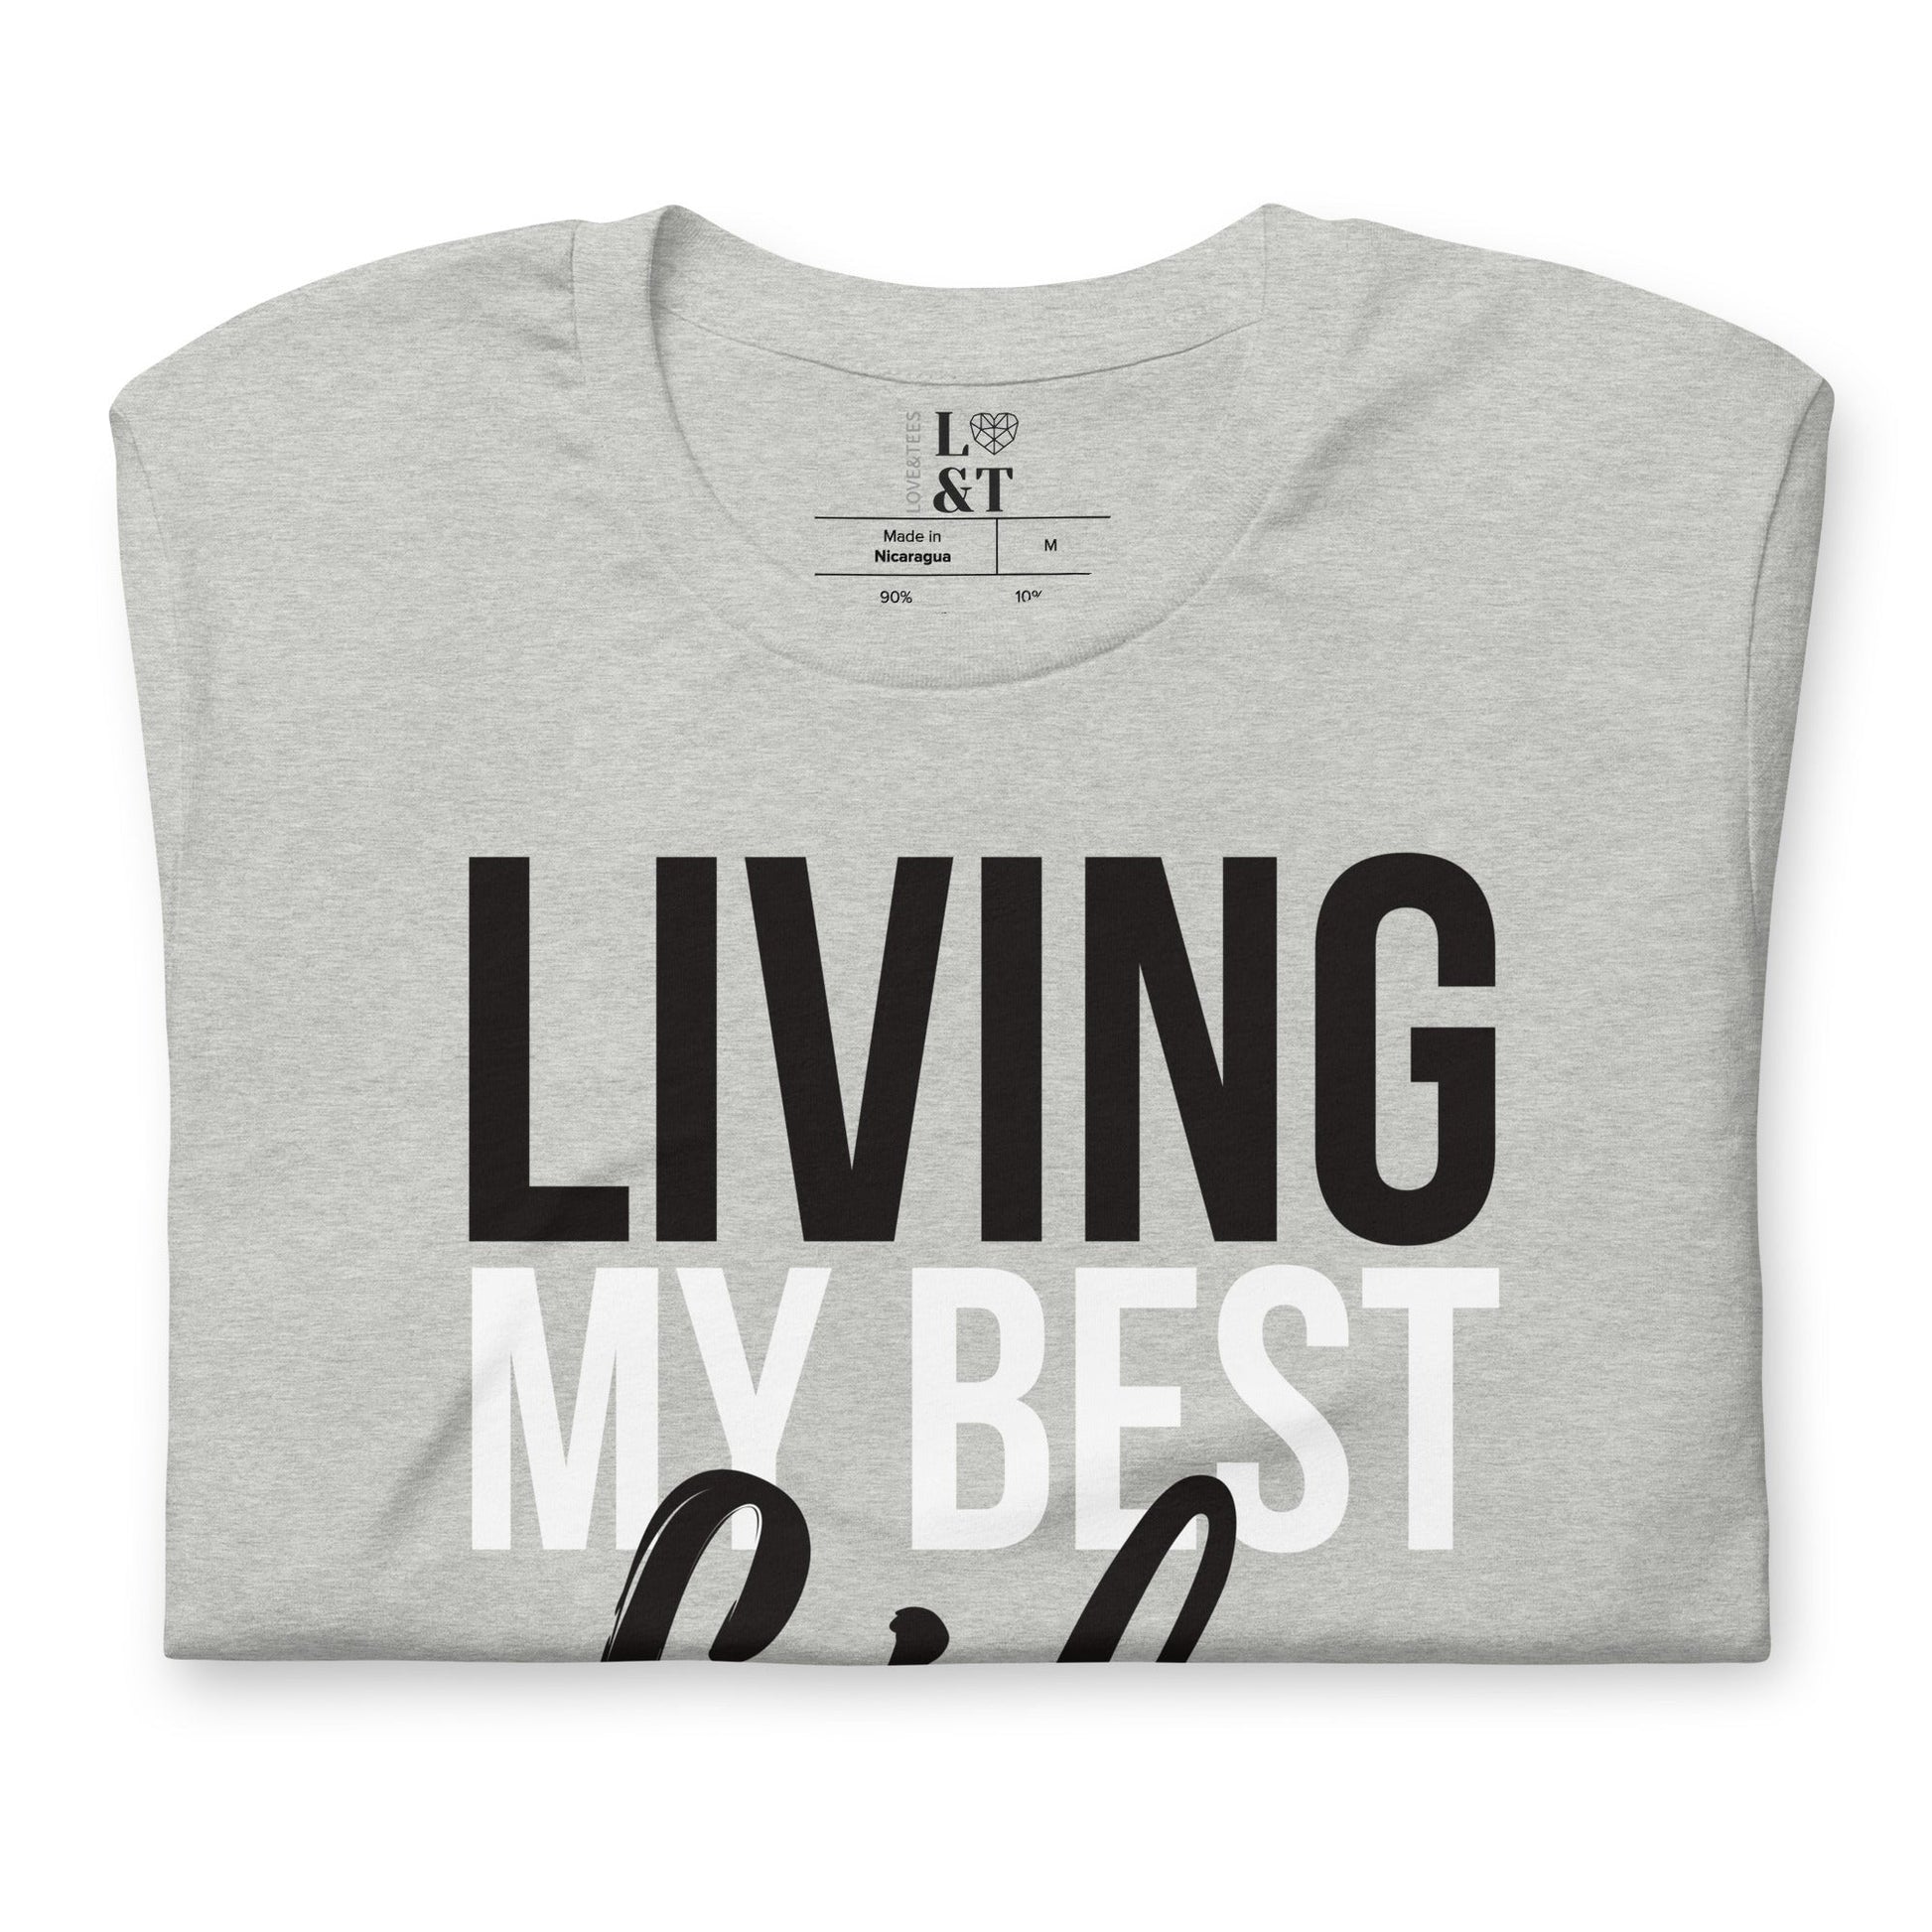 Living My Best Life Unisex T-Shirt - Love&Tees